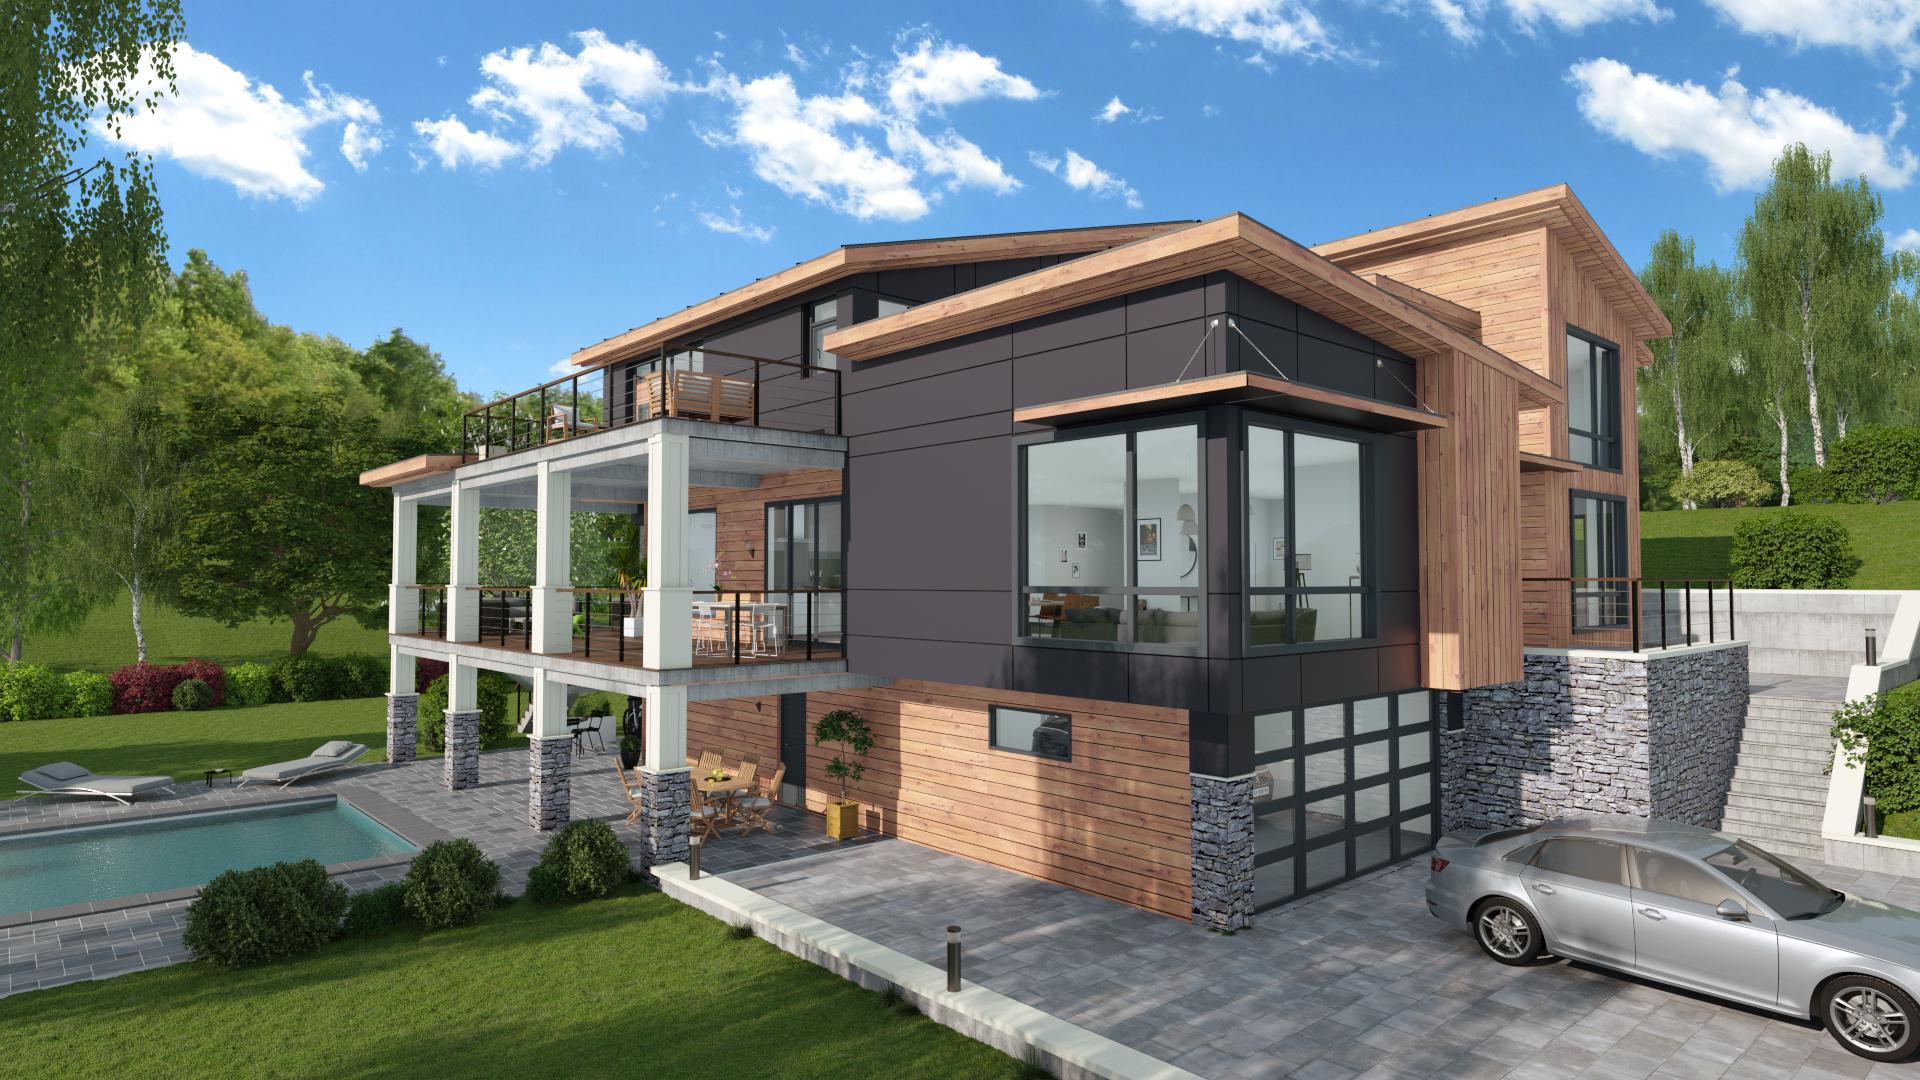 Review Cedreo: 3D Floor Plan and Home Design software - Appvizer